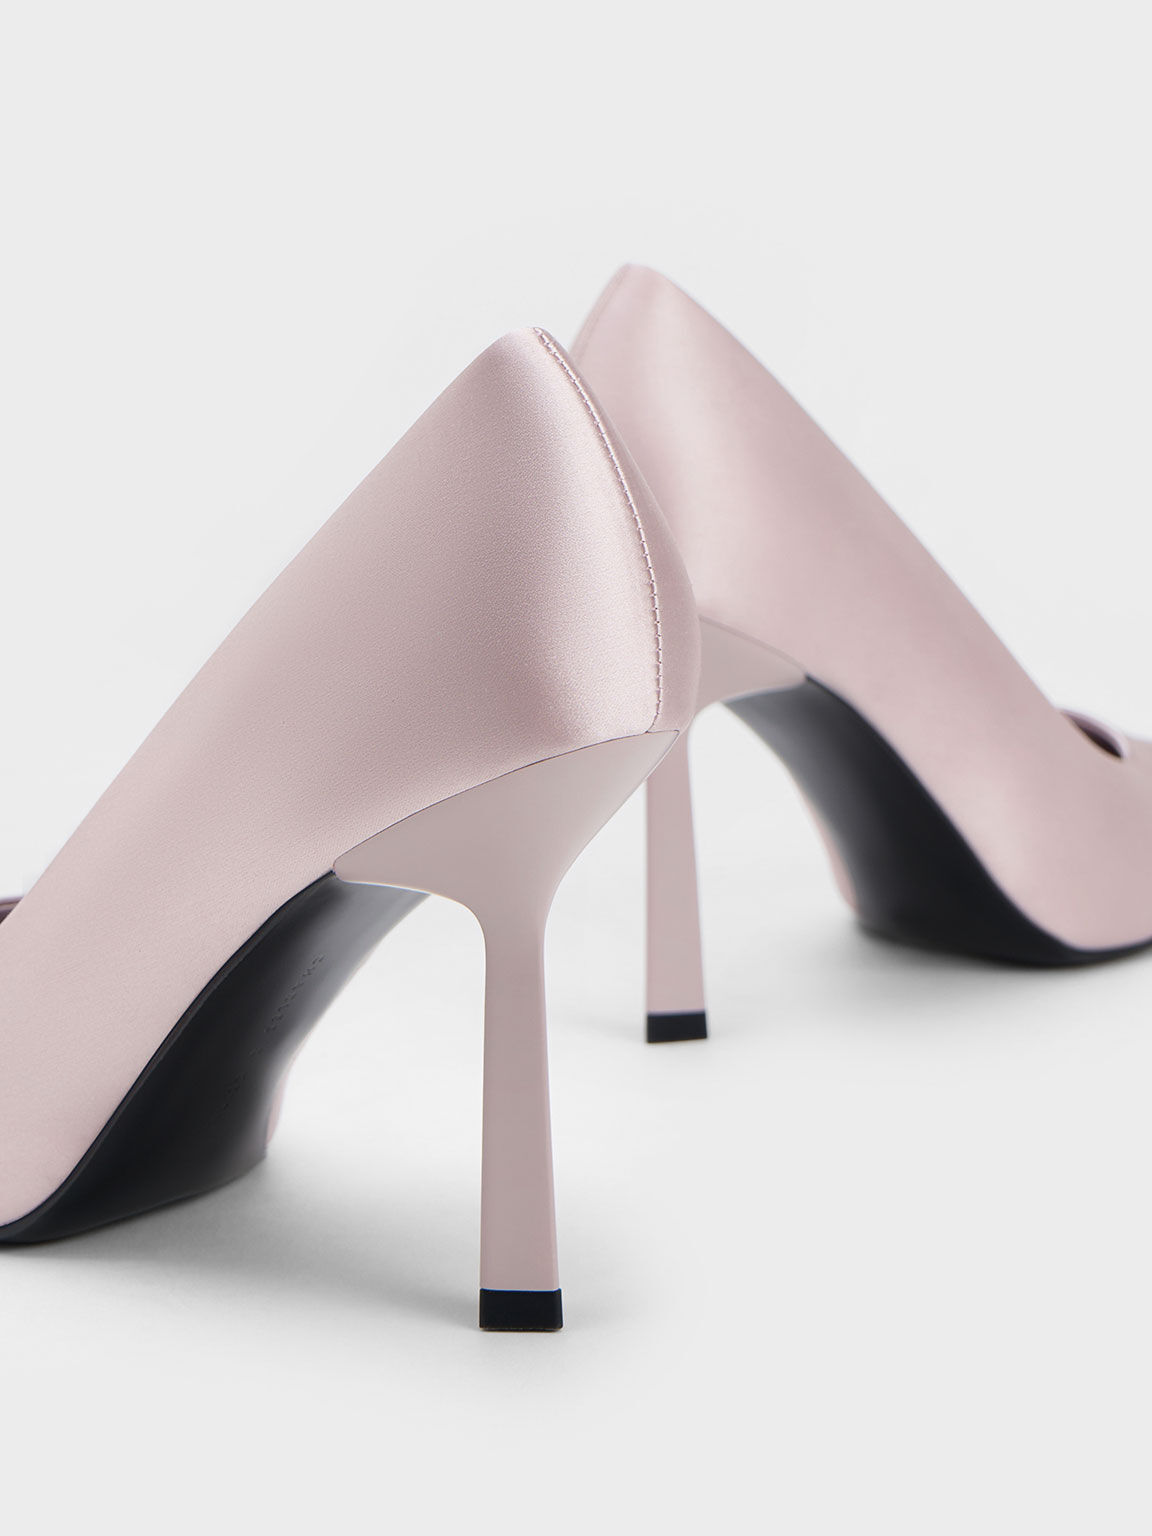 ASOS DESIGN Sparkle embellished mid heeled shoes in lilac | ASOS